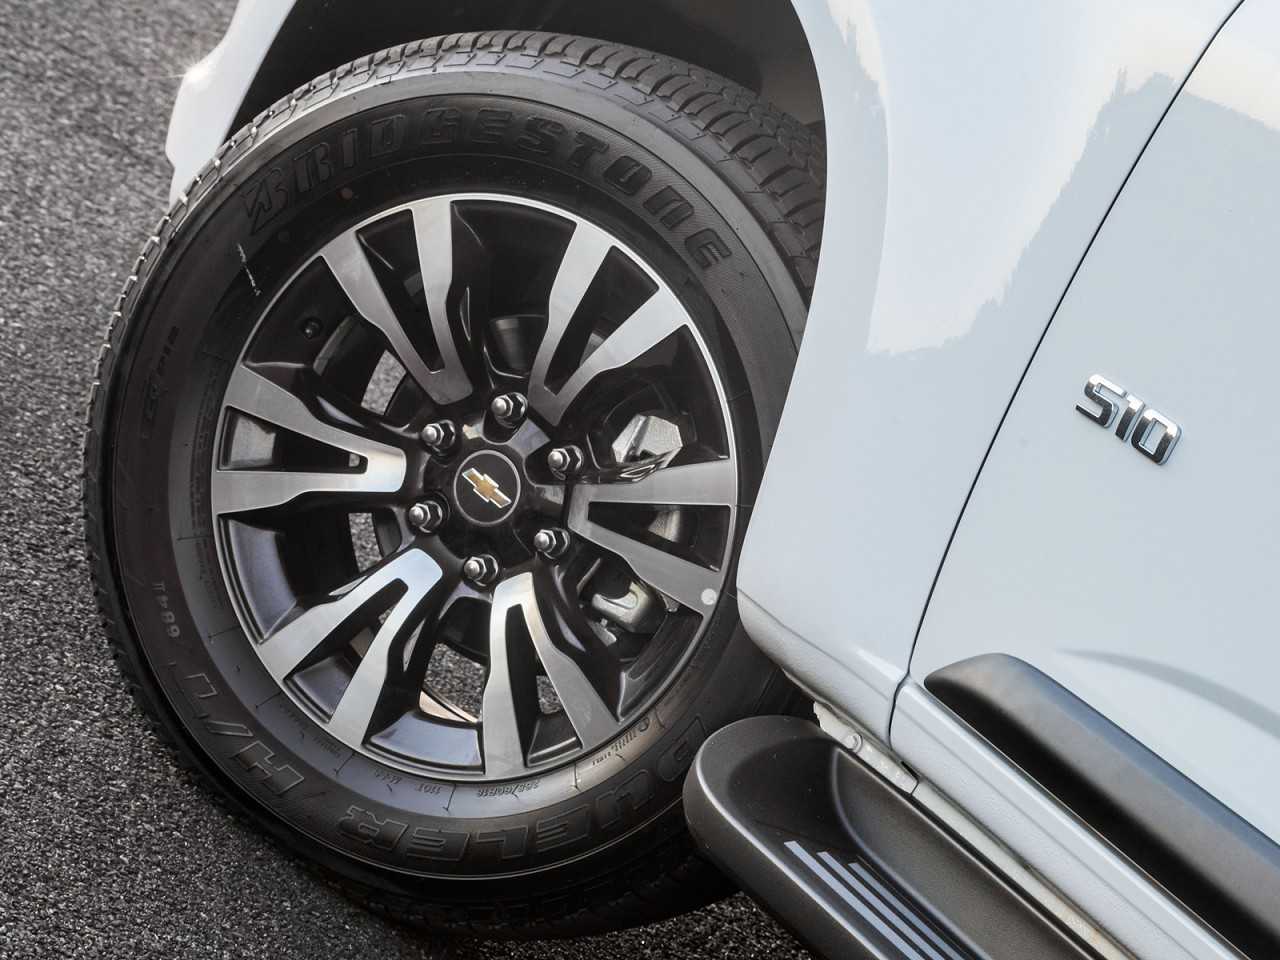 ChevroletS10 2018 - rodas